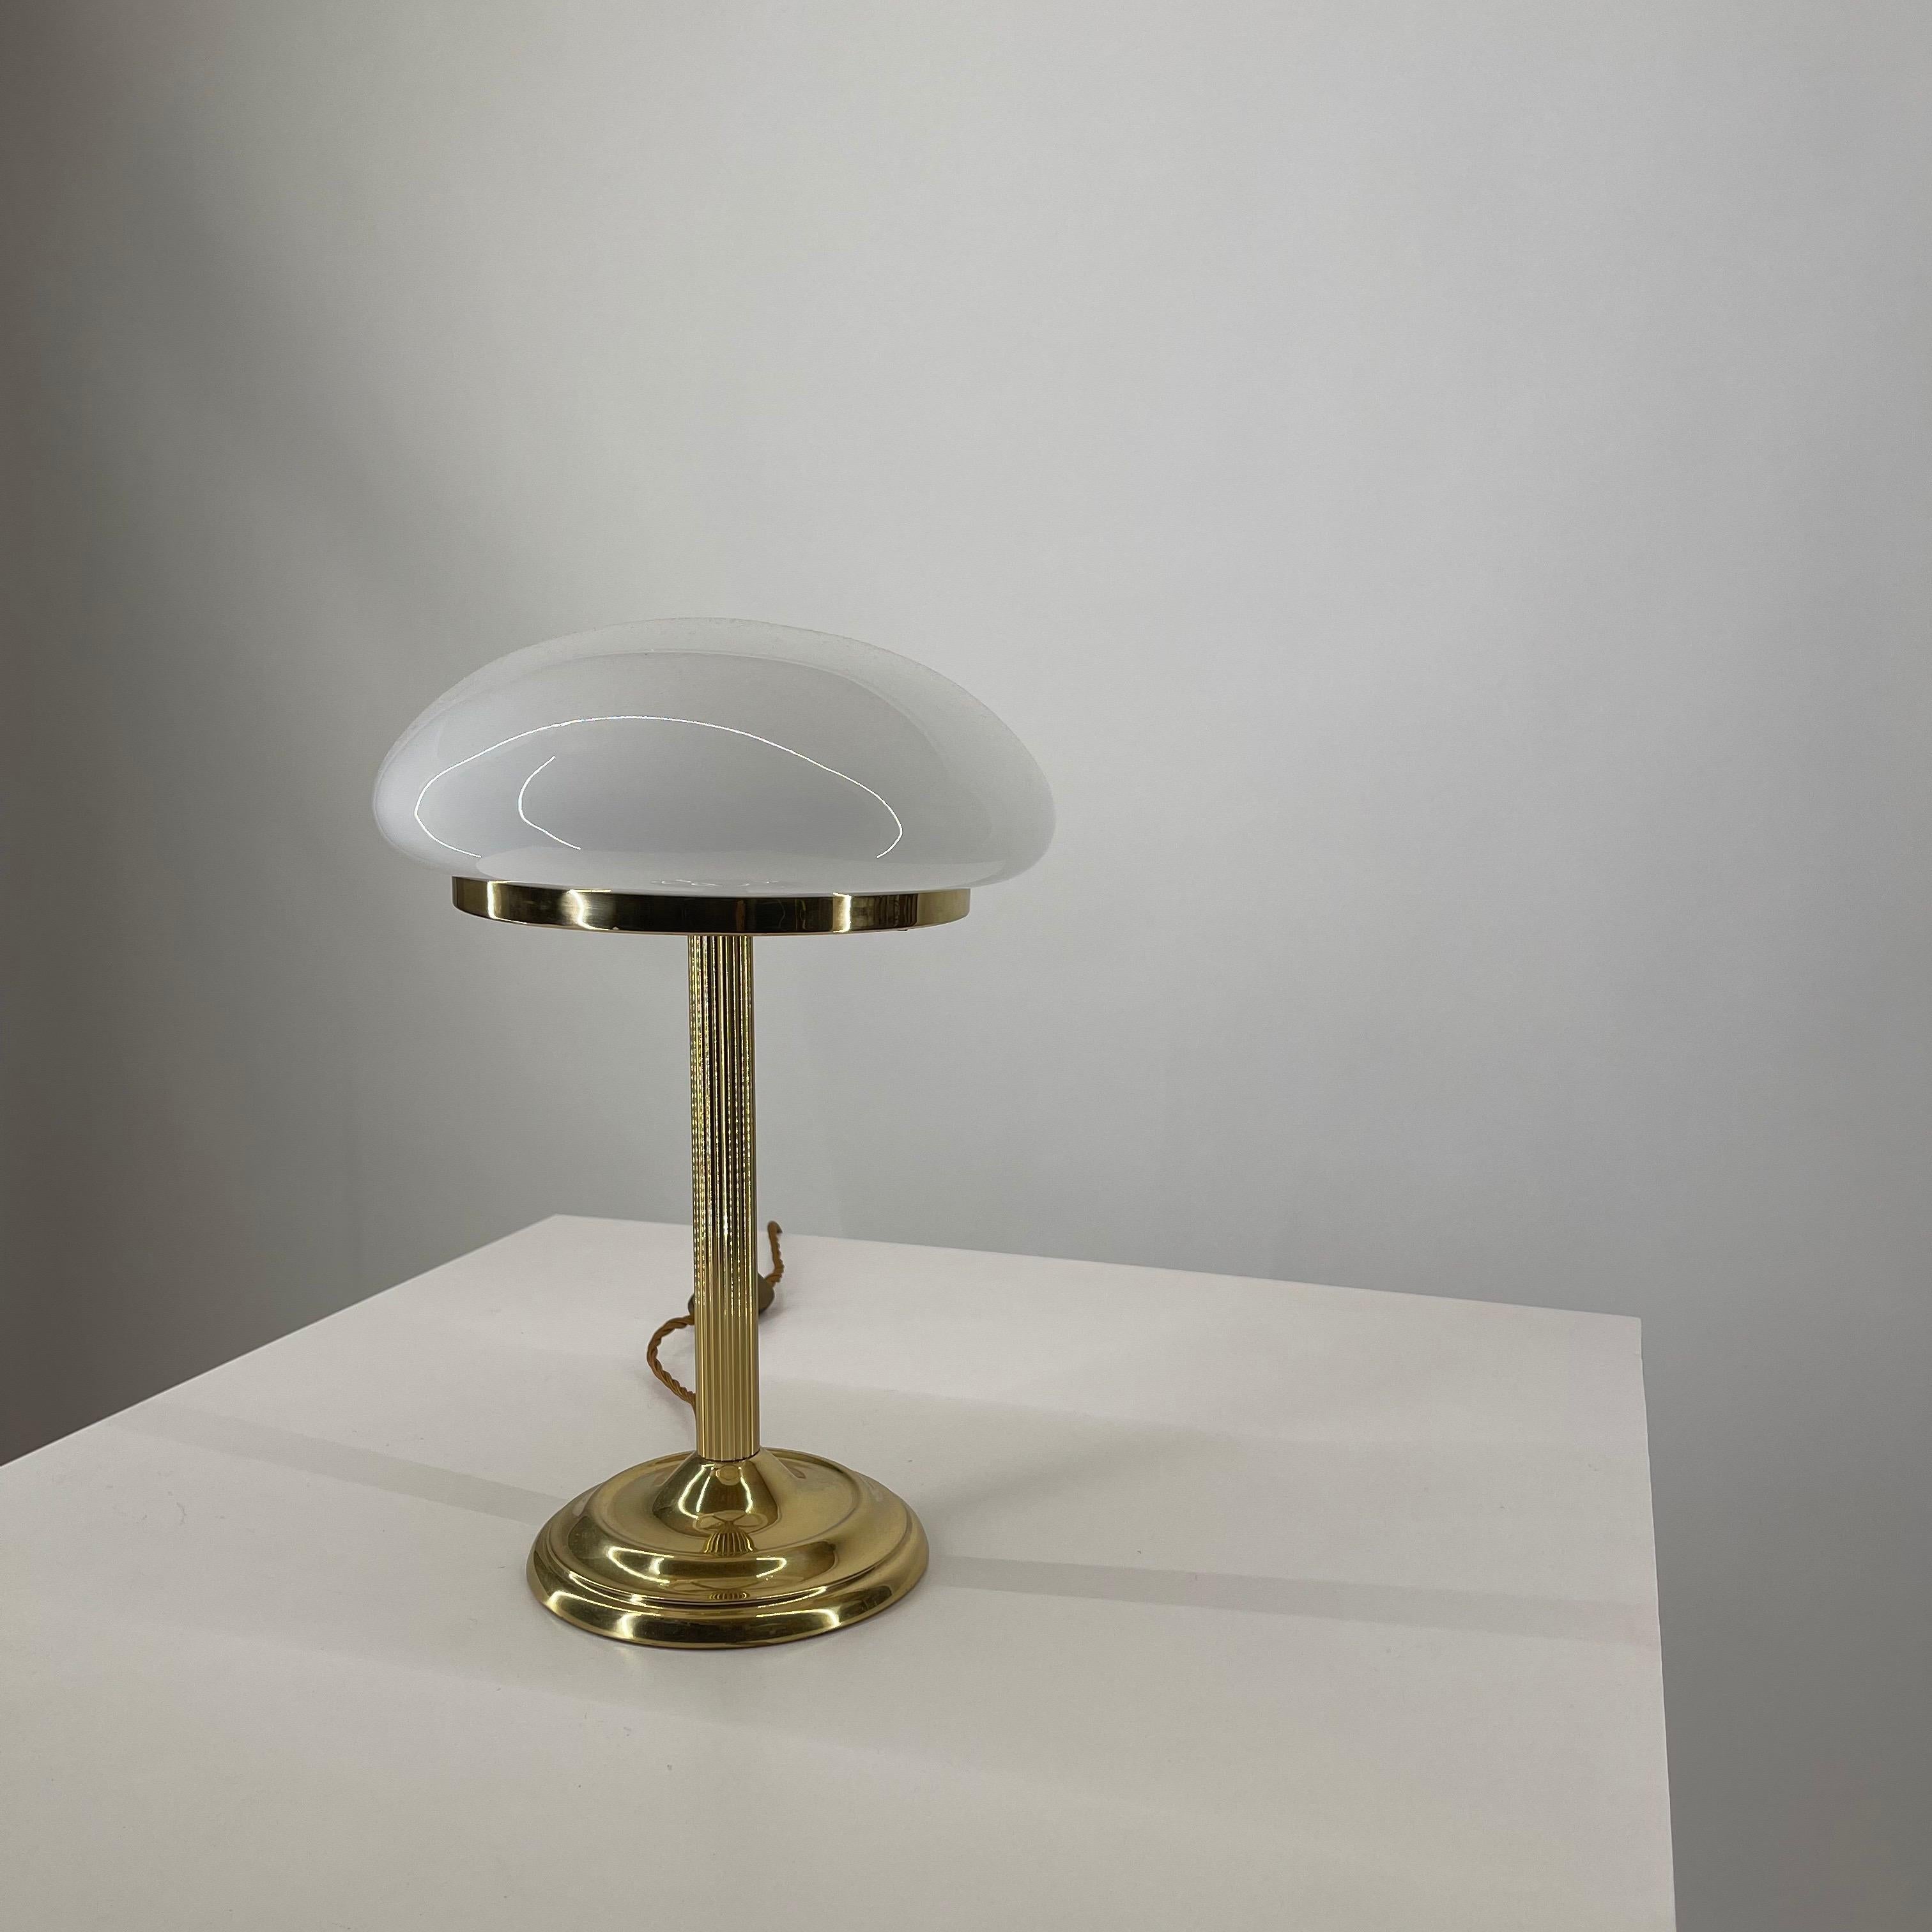 Late 20th Century Art Deco Brass Table Lampe, Austria, 1970s For Sale